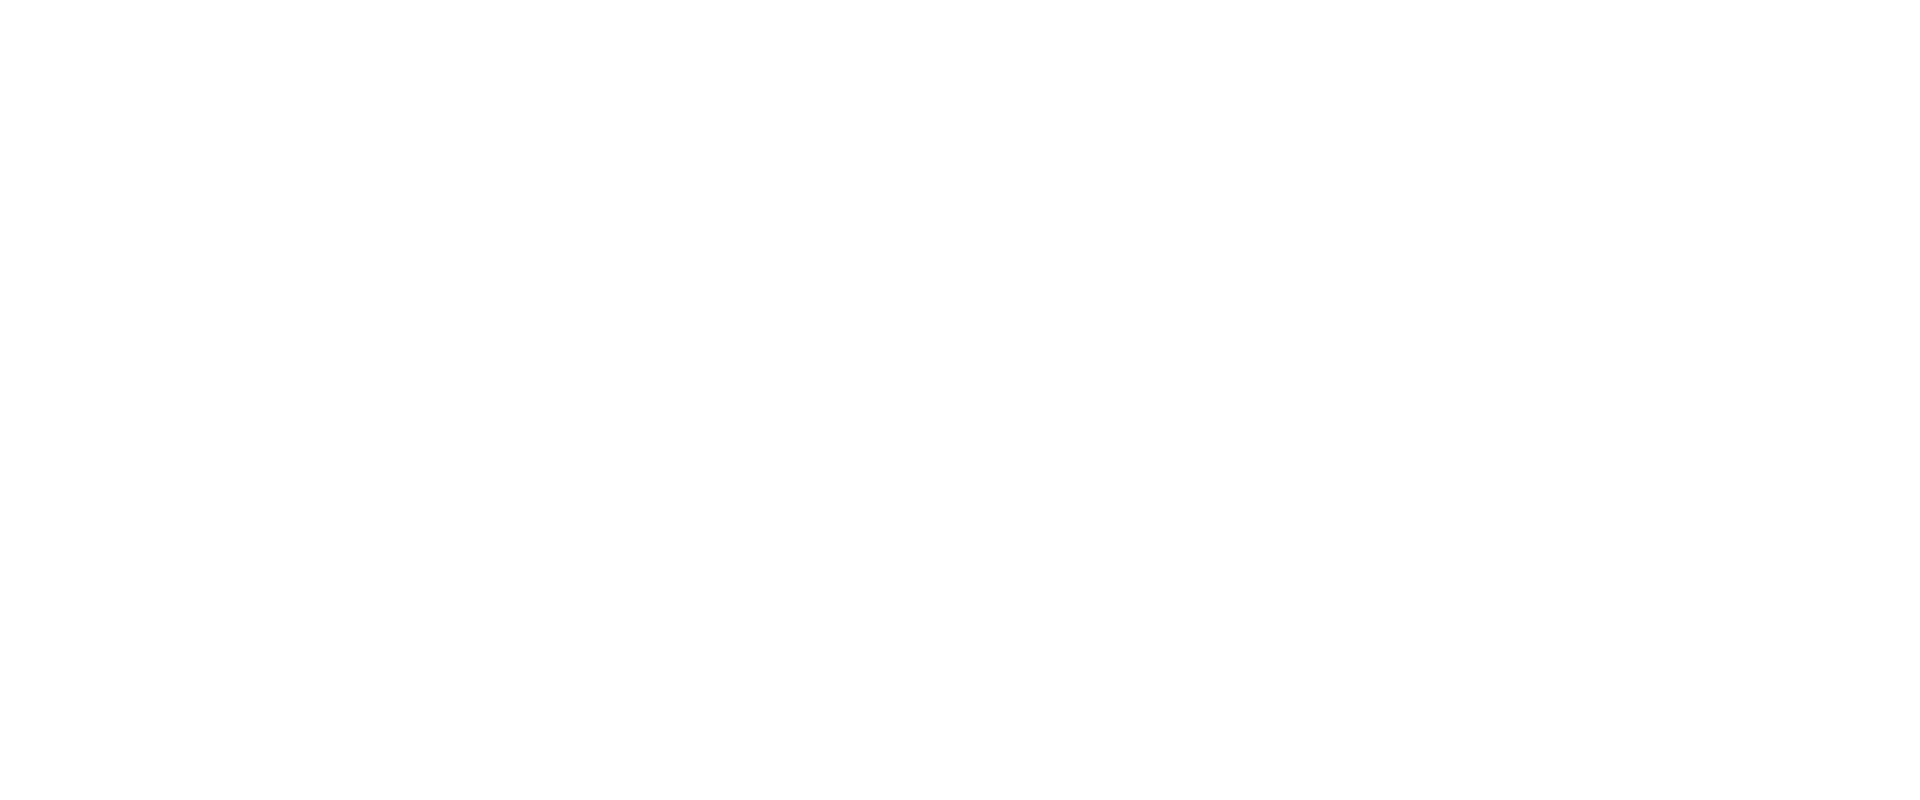 韩语1